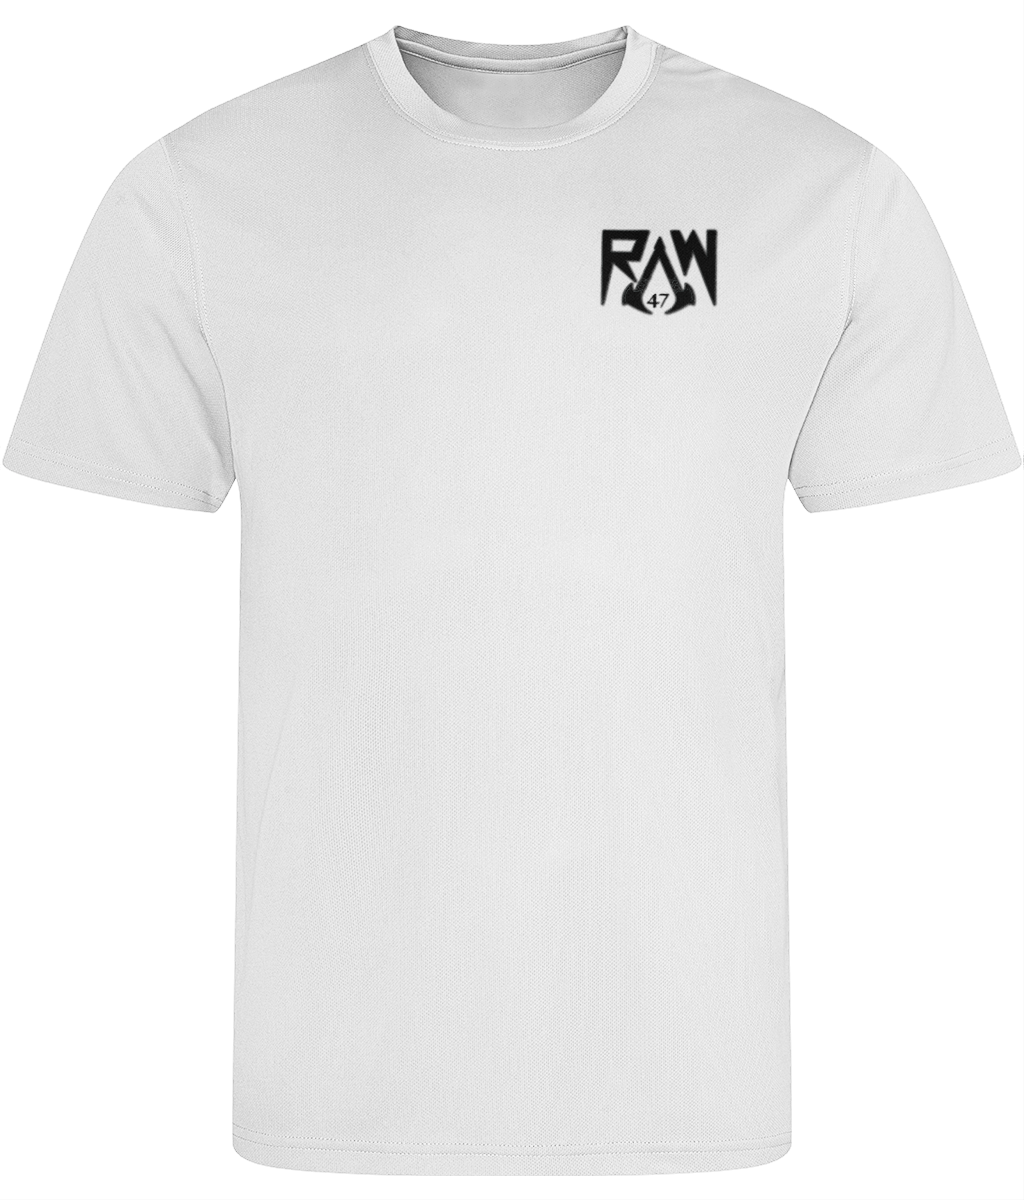 Raw47 Men's Cool Sports T-shirt